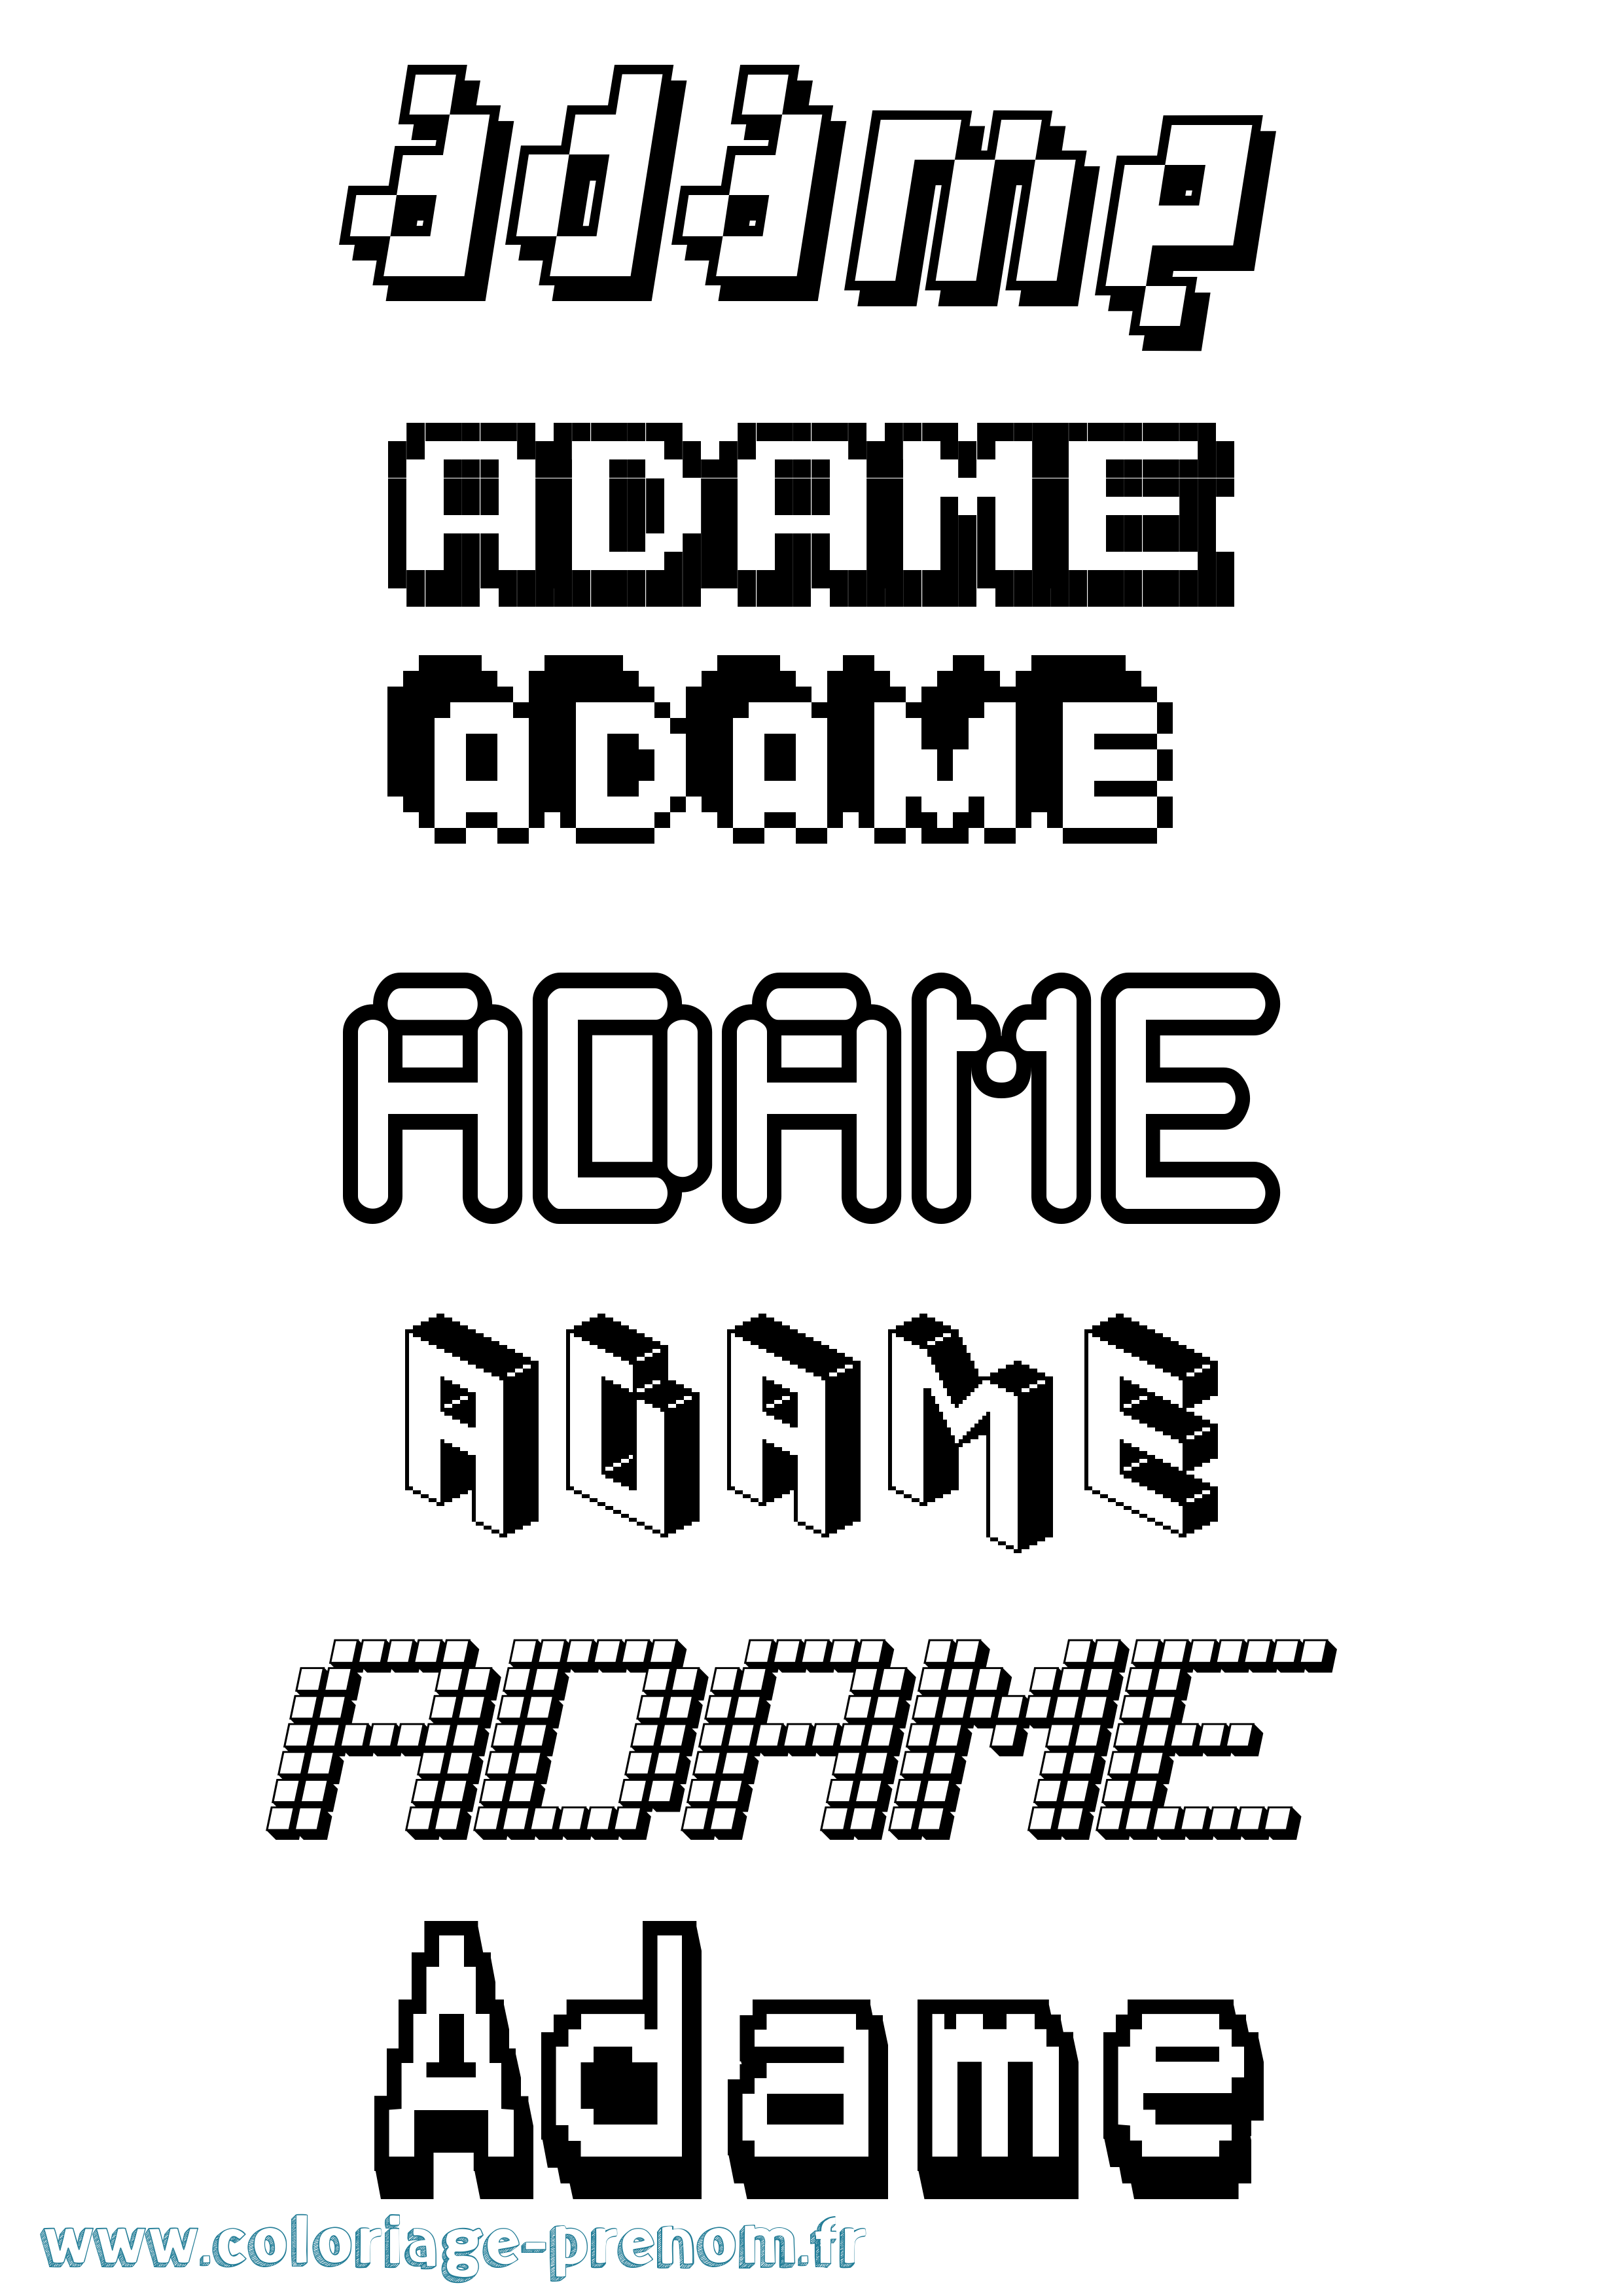 Coloriage prénom Adame Pixel